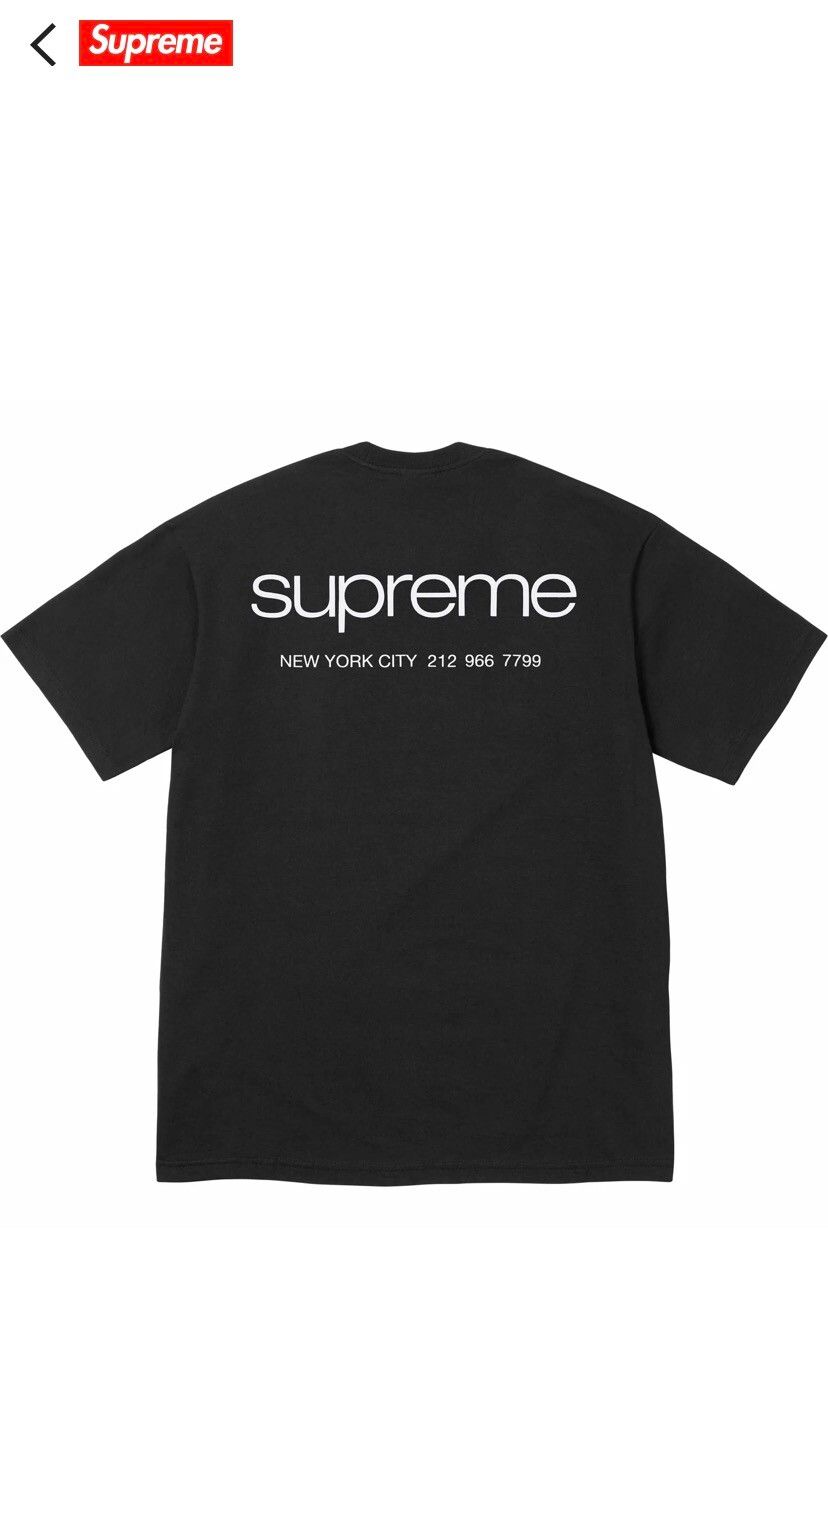 Supreme Supreme NYC Tee XL black | Grailed